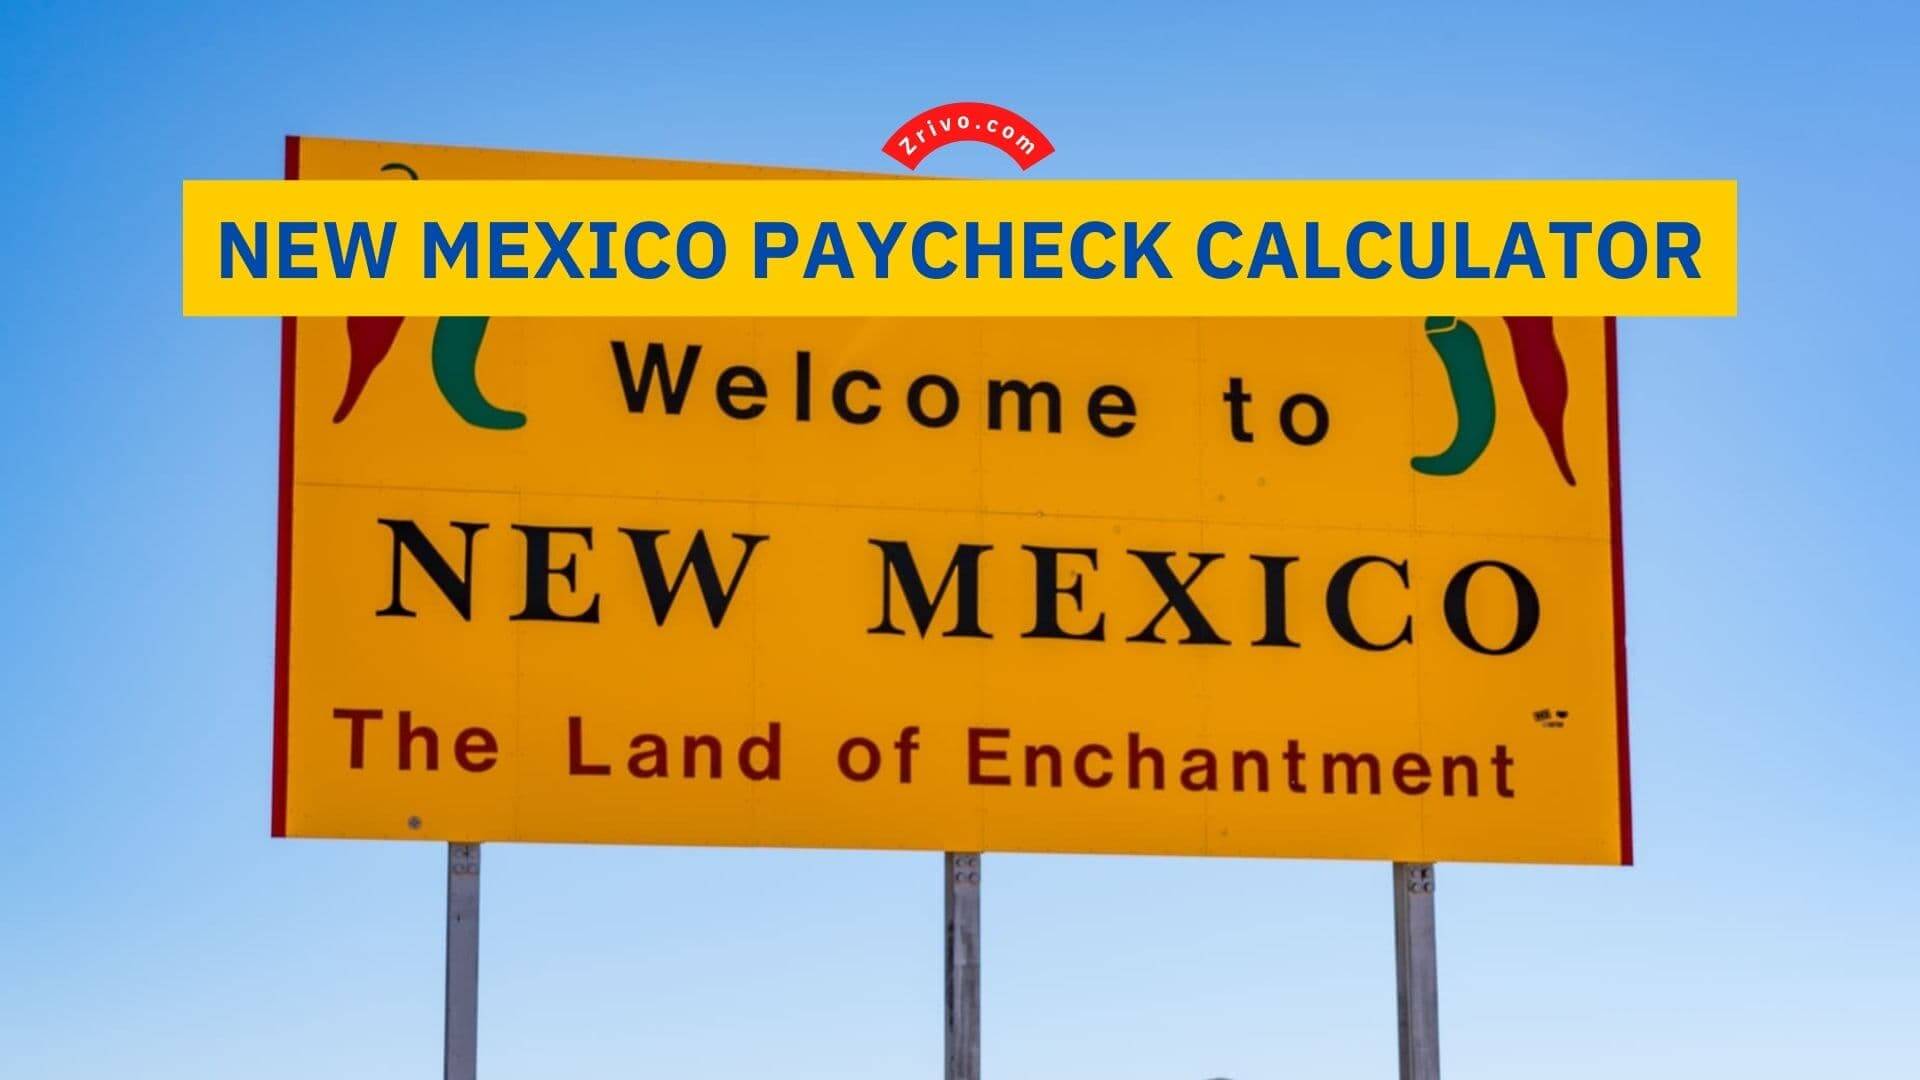 New Mexico Paycheck Calculator